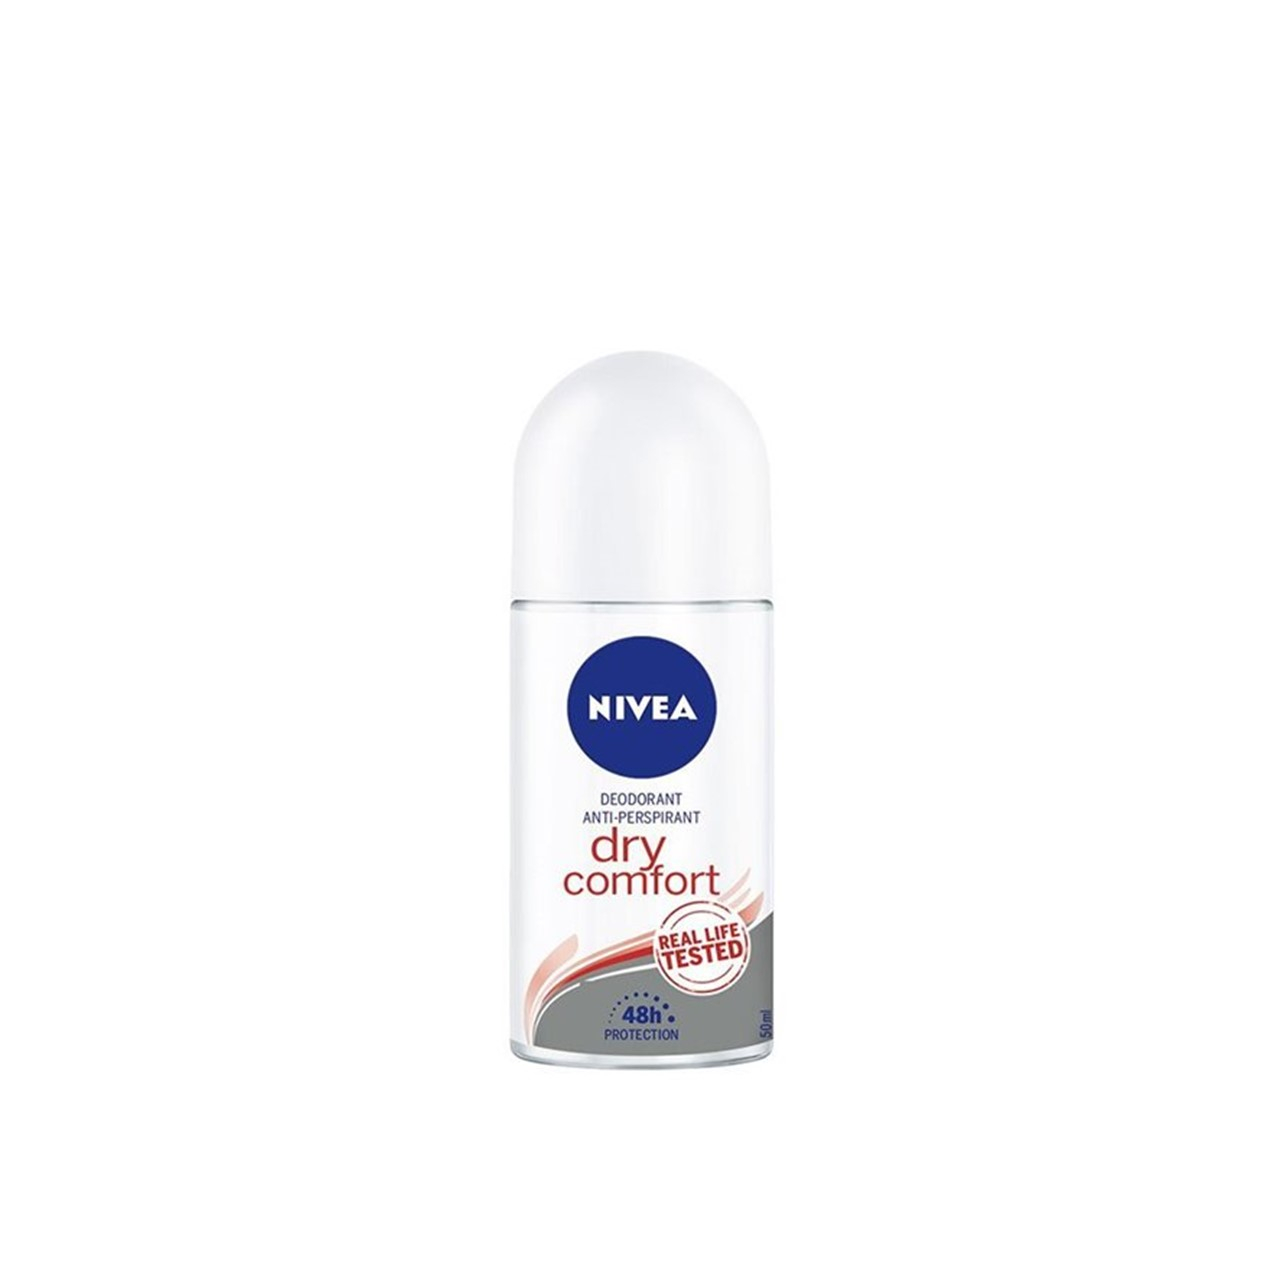 https://static.beautytocare.com/media/catalog/product/n/i/nivea-dry-comfort-anti-perspirant-deodorant-roll-on-50ml.jpg